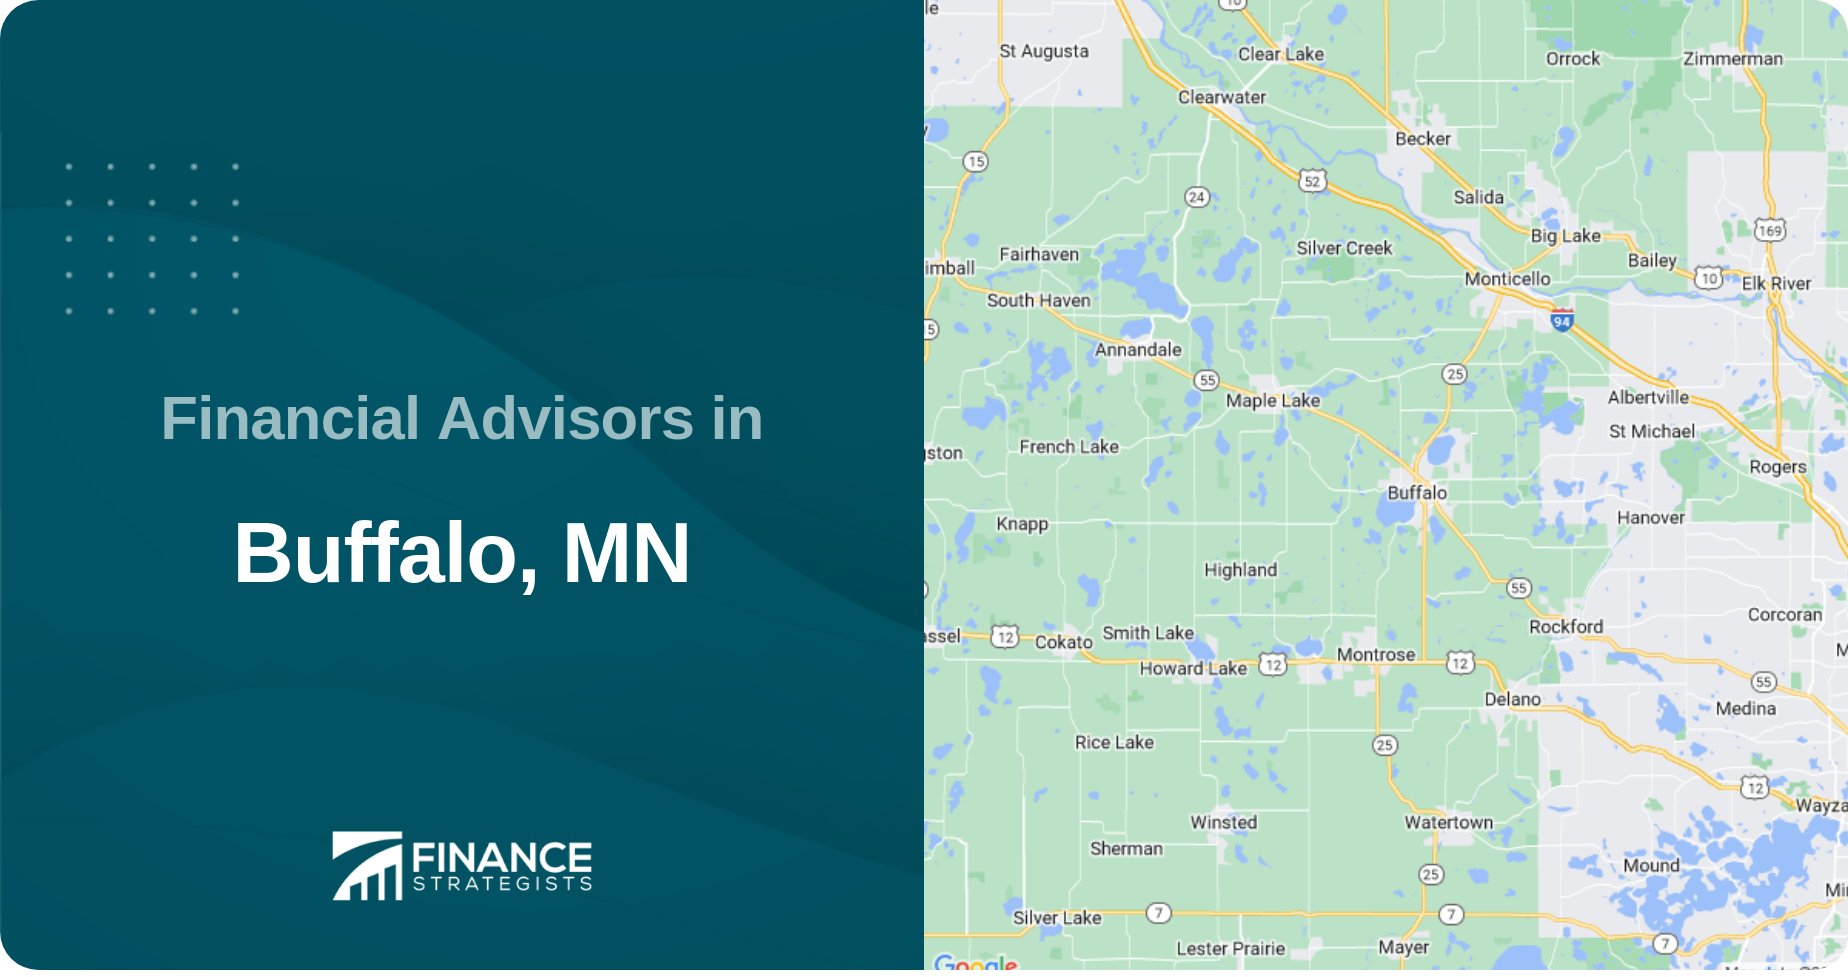 Financial Advisors in Buffalo, MN